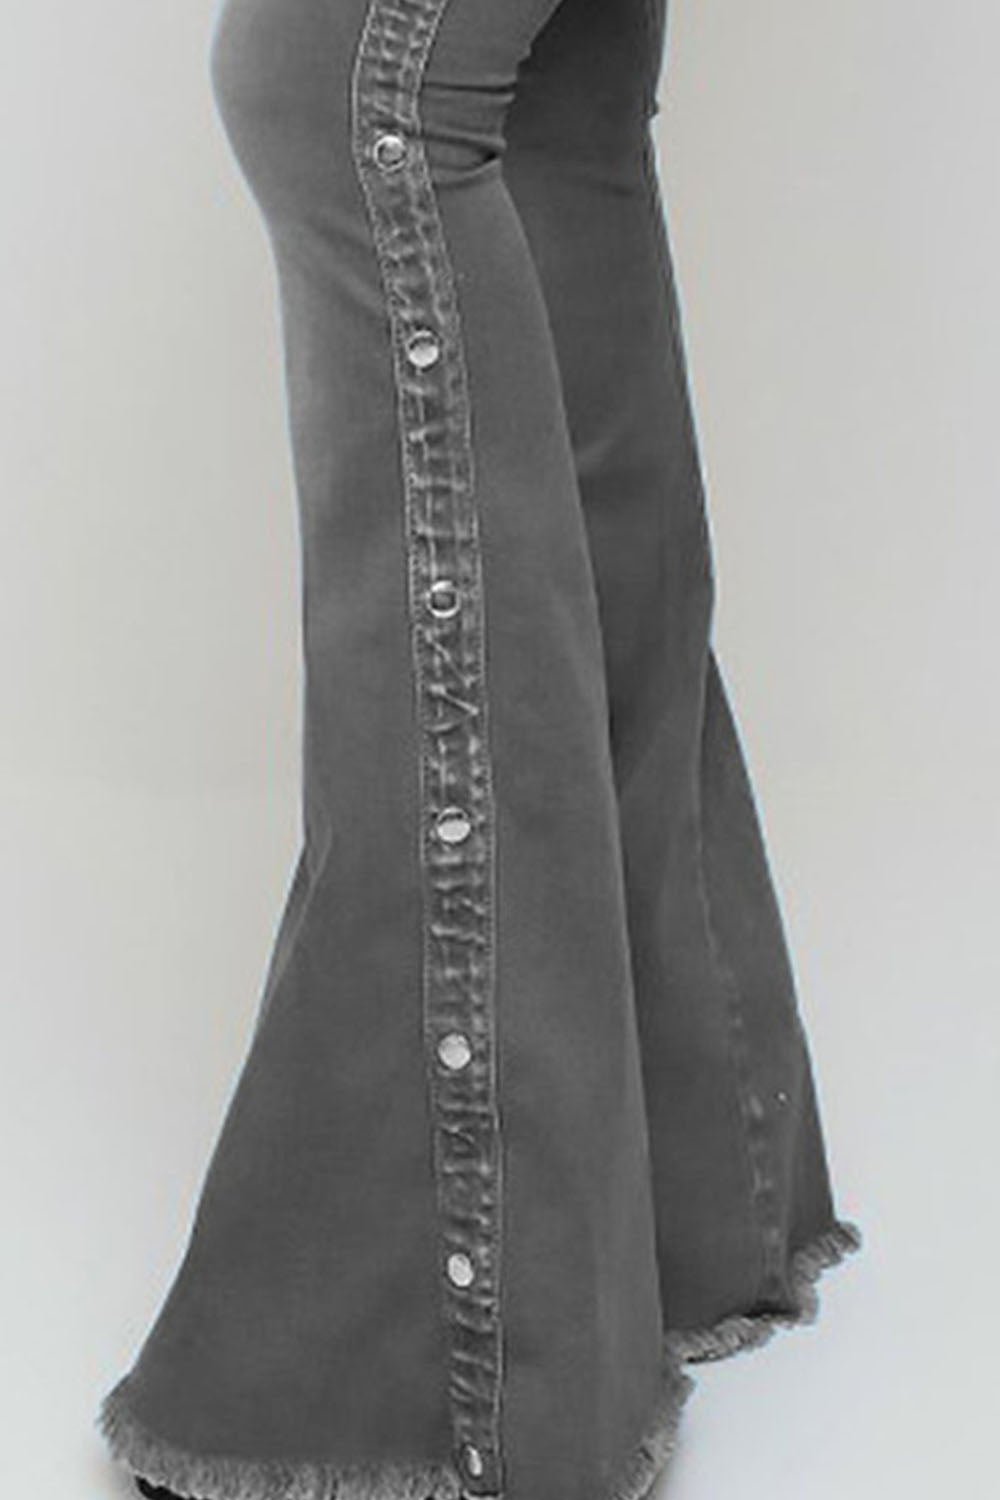 Button Detail Flare Jeans - GemThreads Boutique